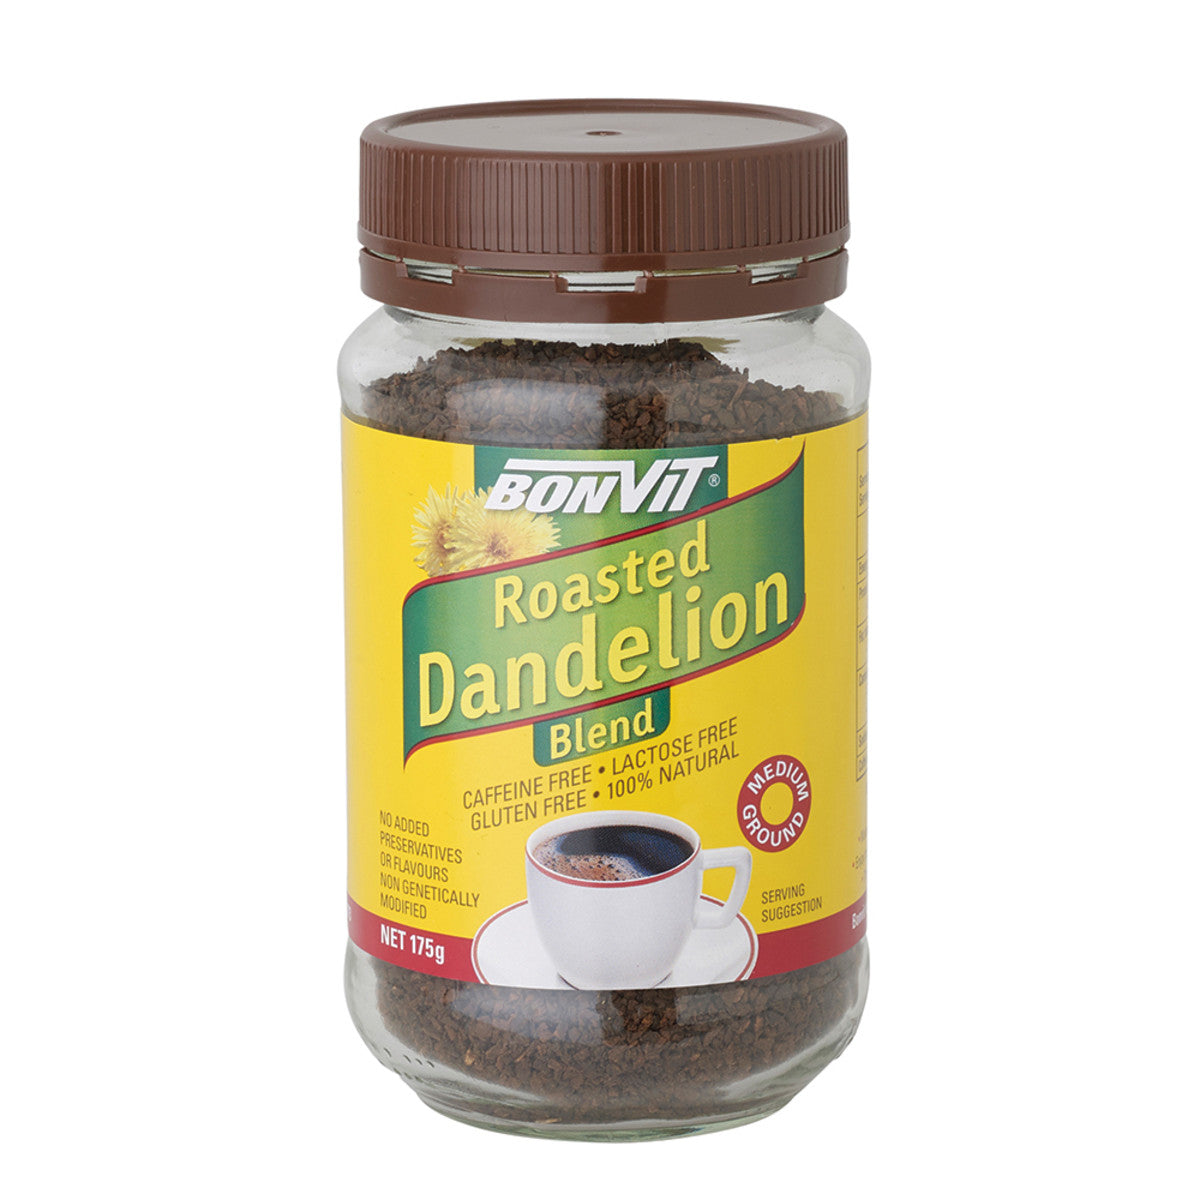 Bonvit Roasted Dandelion Blend Medium Ground 175g, 500g Or 1Kg, Caffeine Free